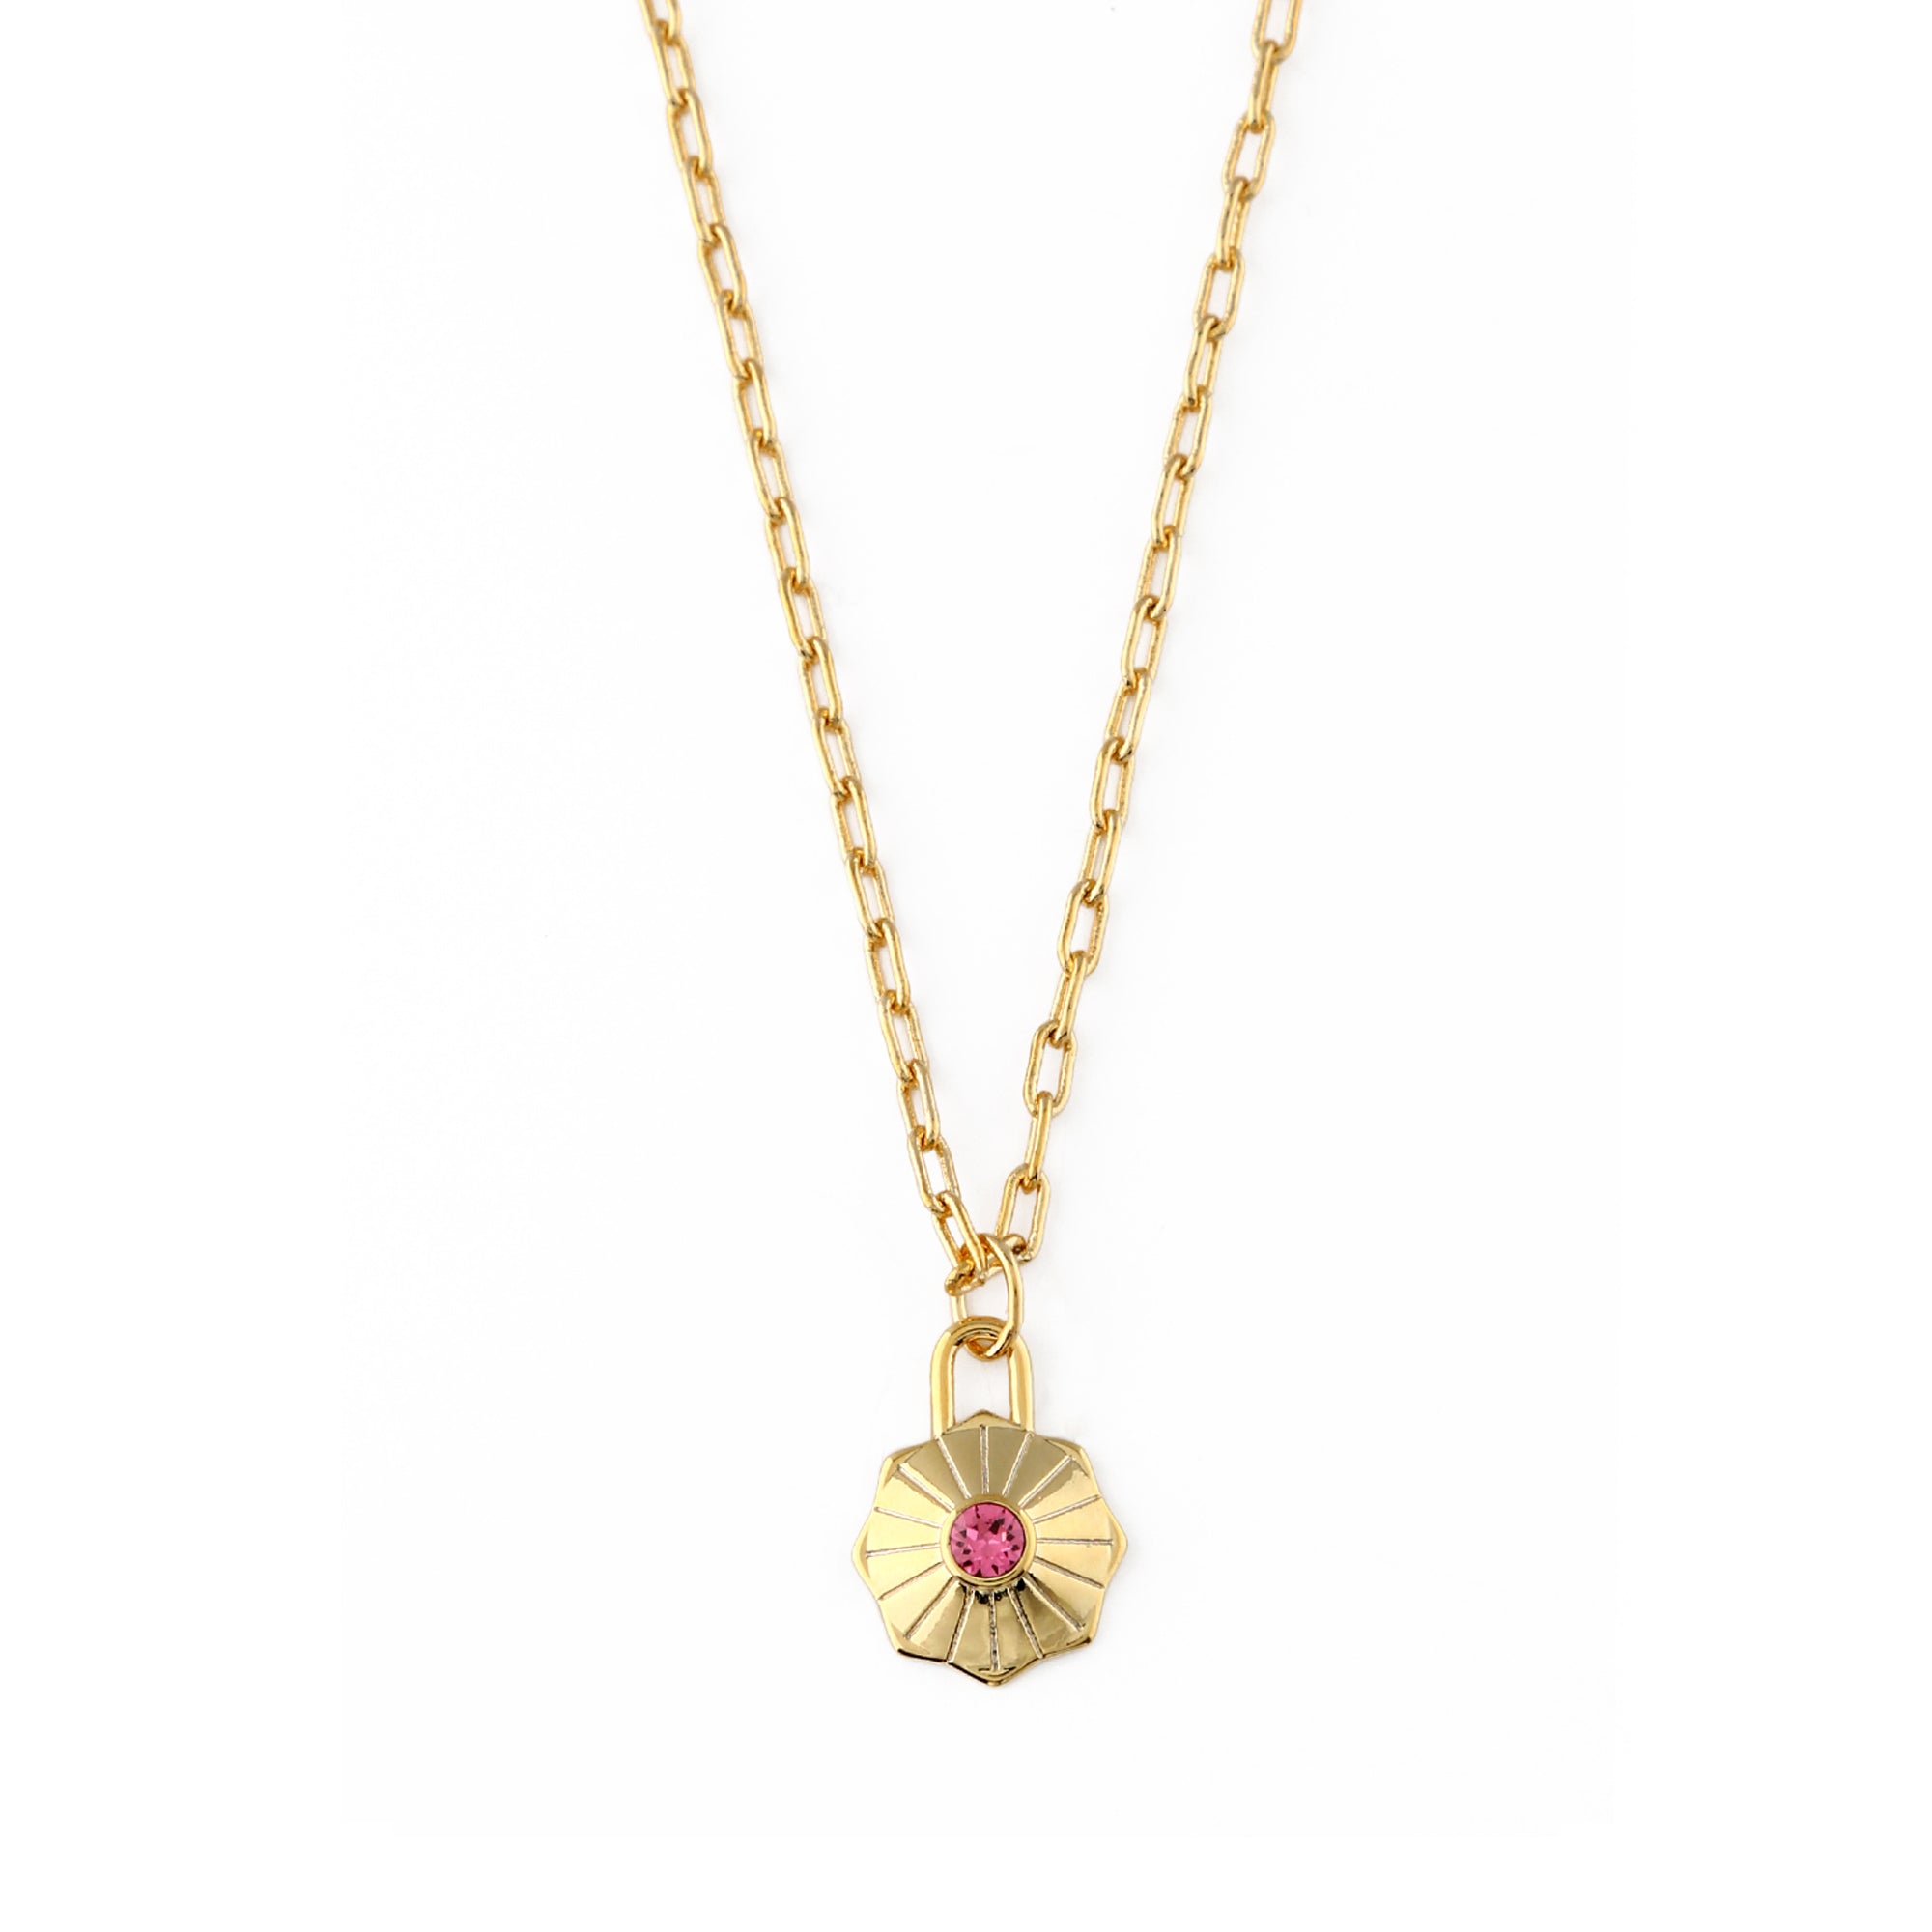 October Birthstone Necklace Made With Swarovski Crystals - Gold - Orelia London